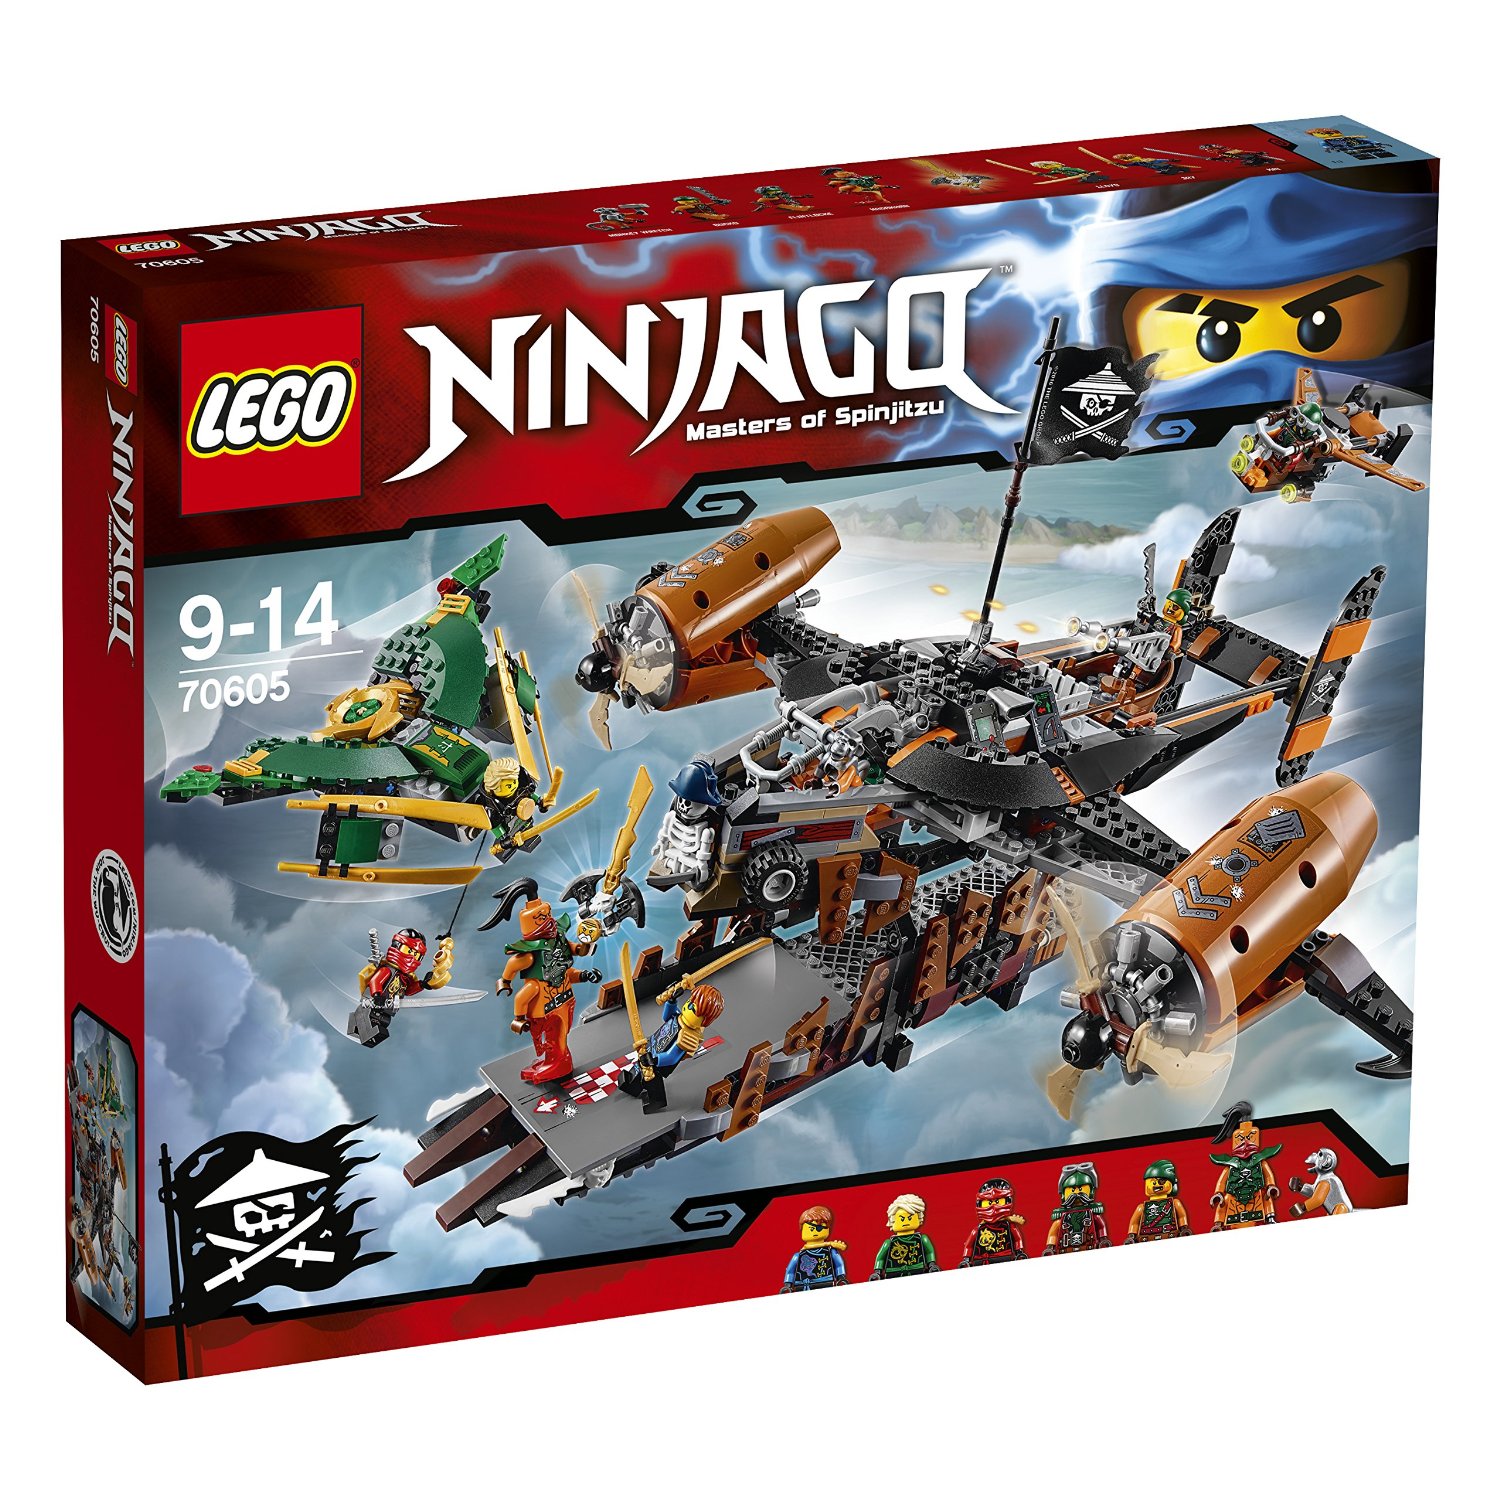 Beginner soep briefpapier Lego 2016 ninjago Sets and Minifigures - Minifigure Price Guide